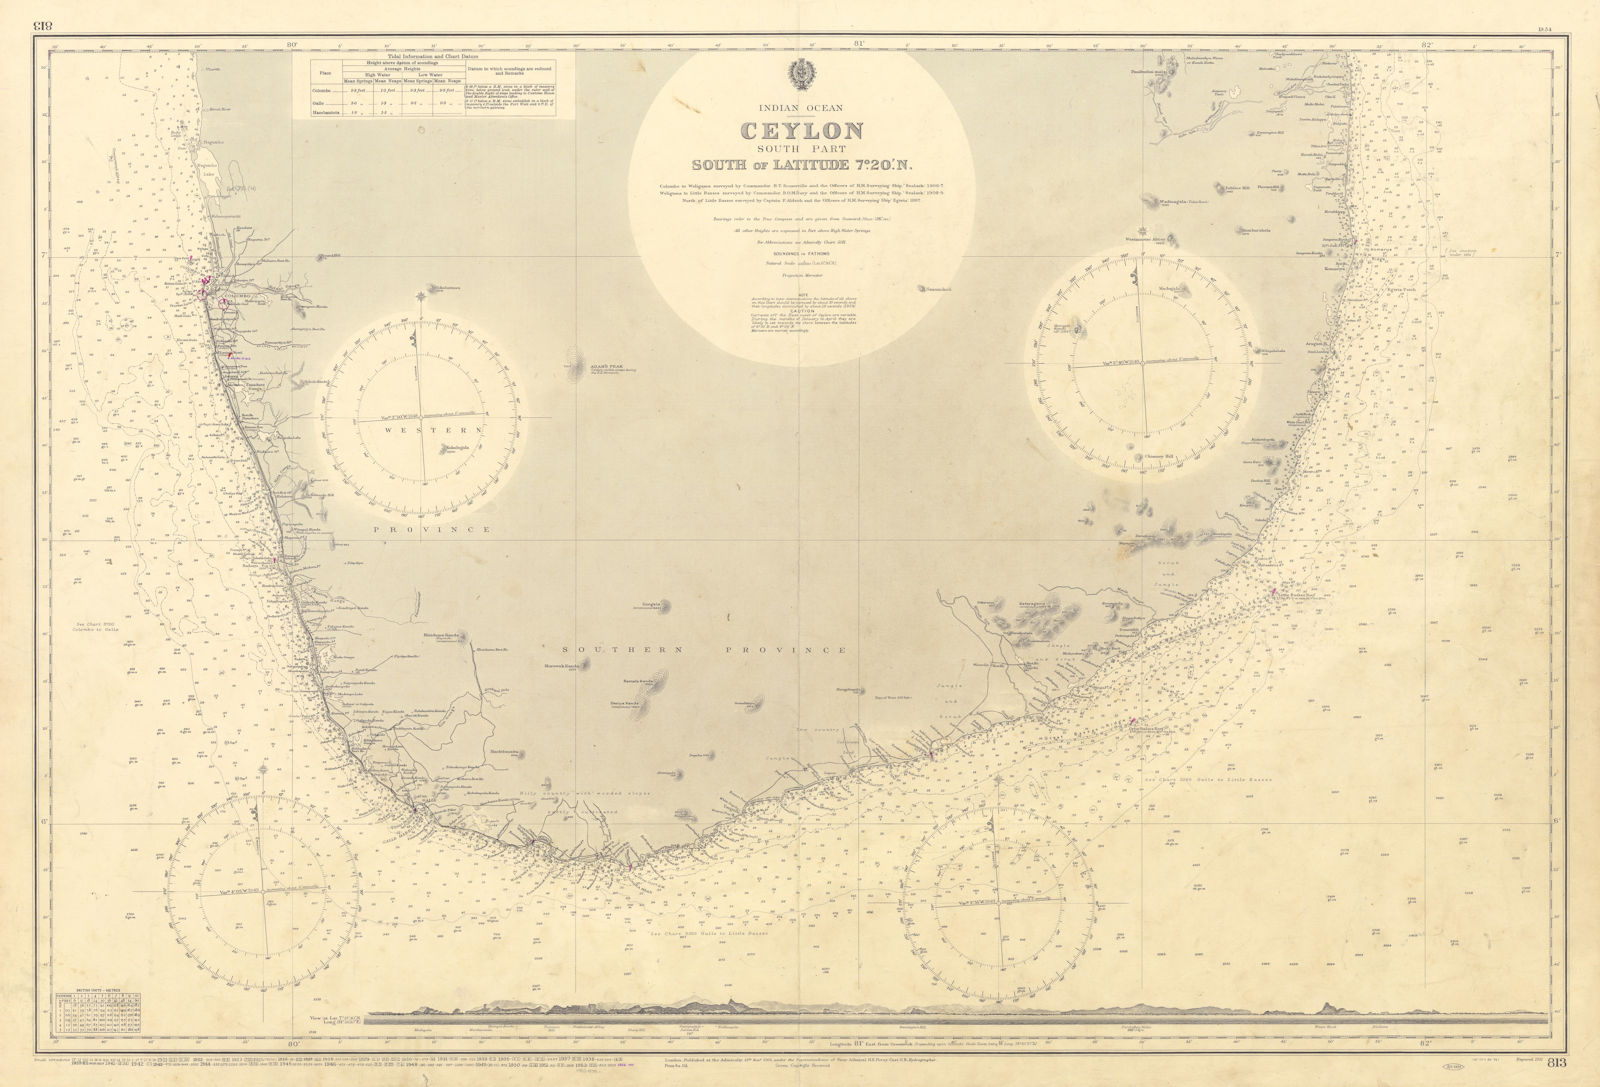 Ceylon South of Latitude 7°20'N. Sri Lanka. ADMIRALTY sea chart 1911 (1954) map